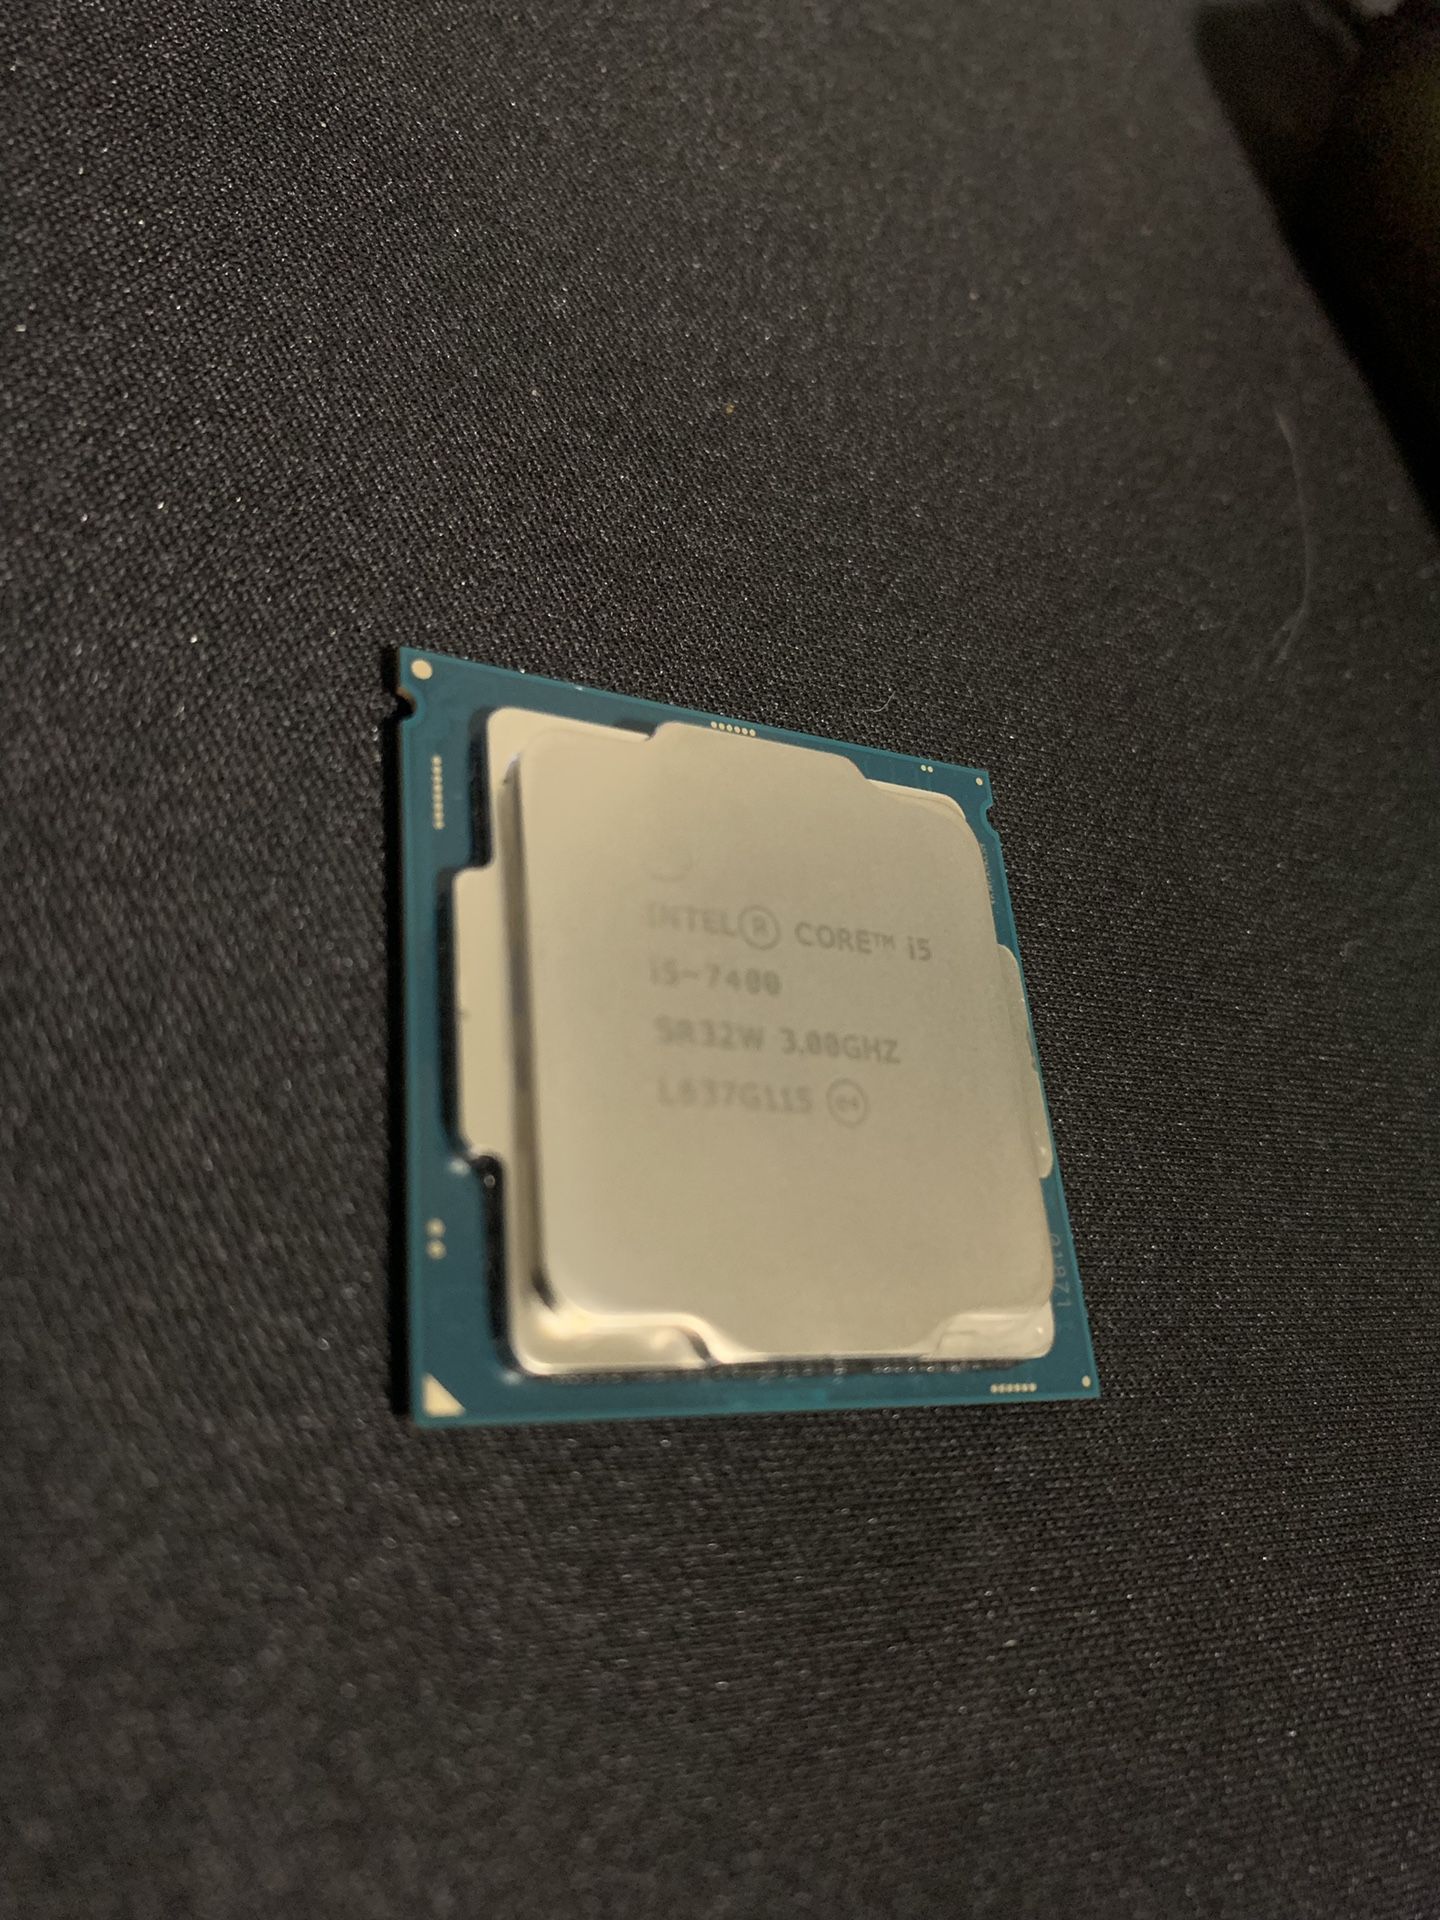 Intel core i5 7400